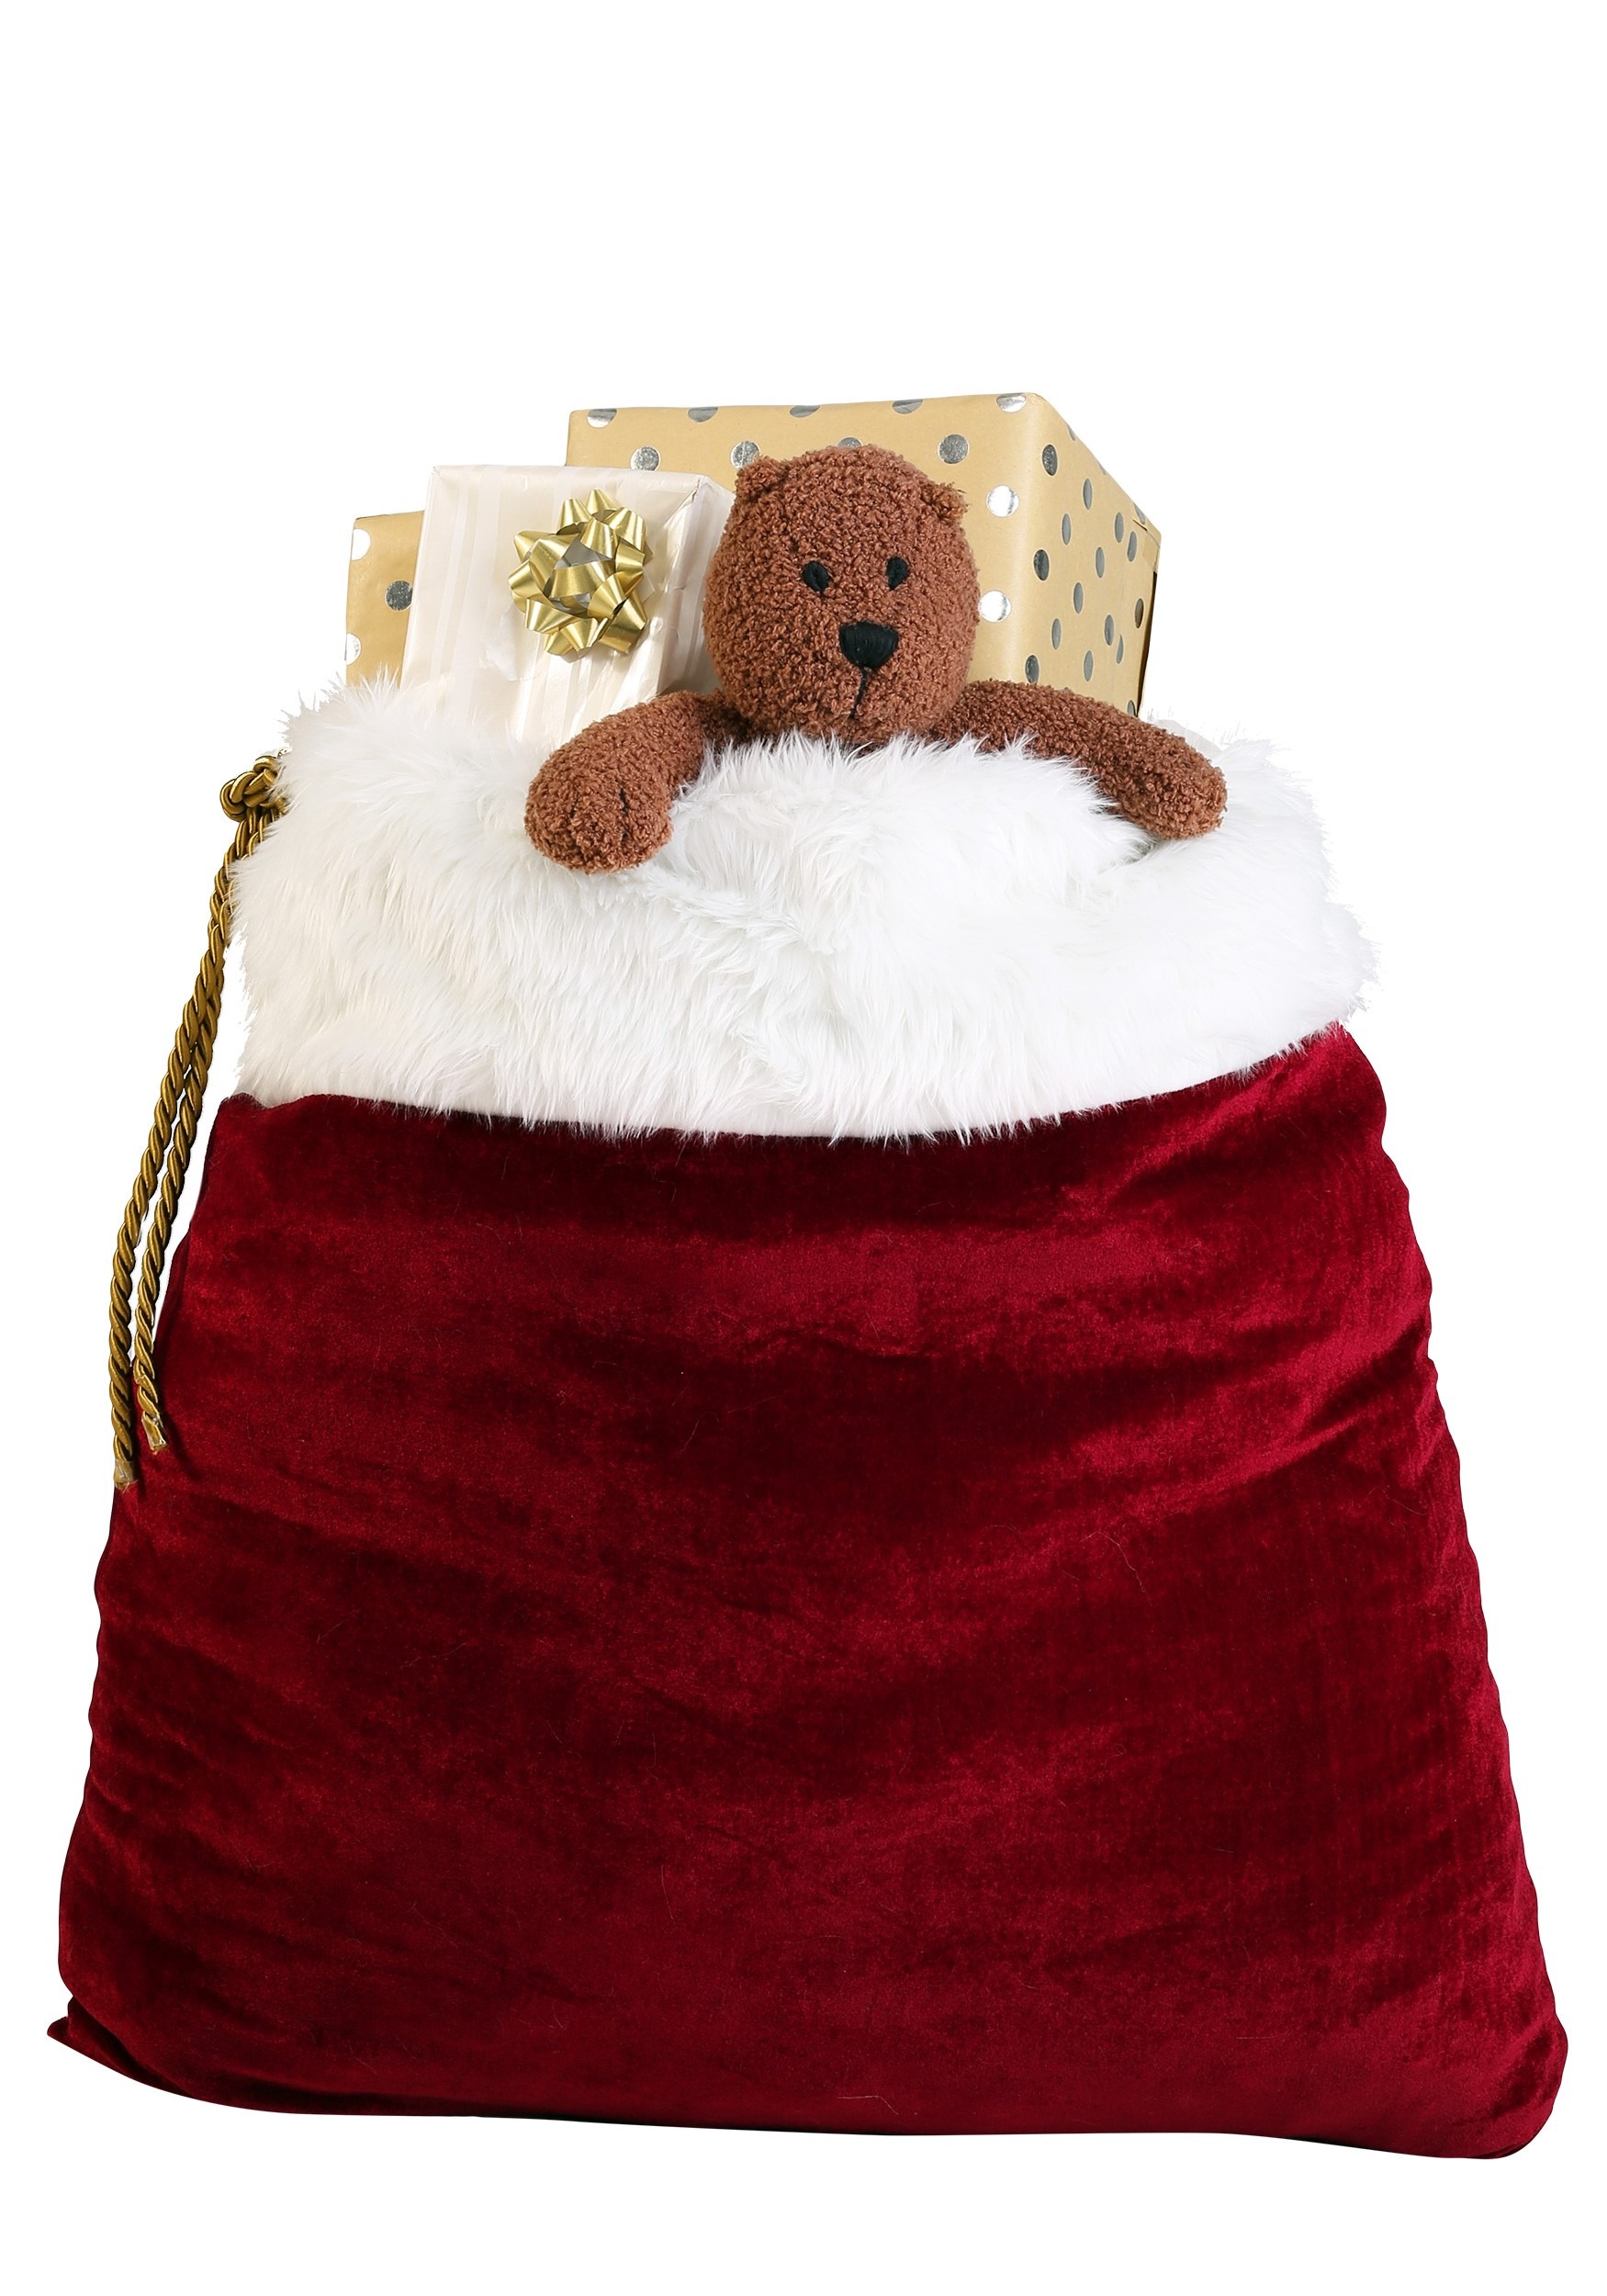 4-Foot Santa Bag Full of Toys - Promotional Giveaway – Inform Promotions